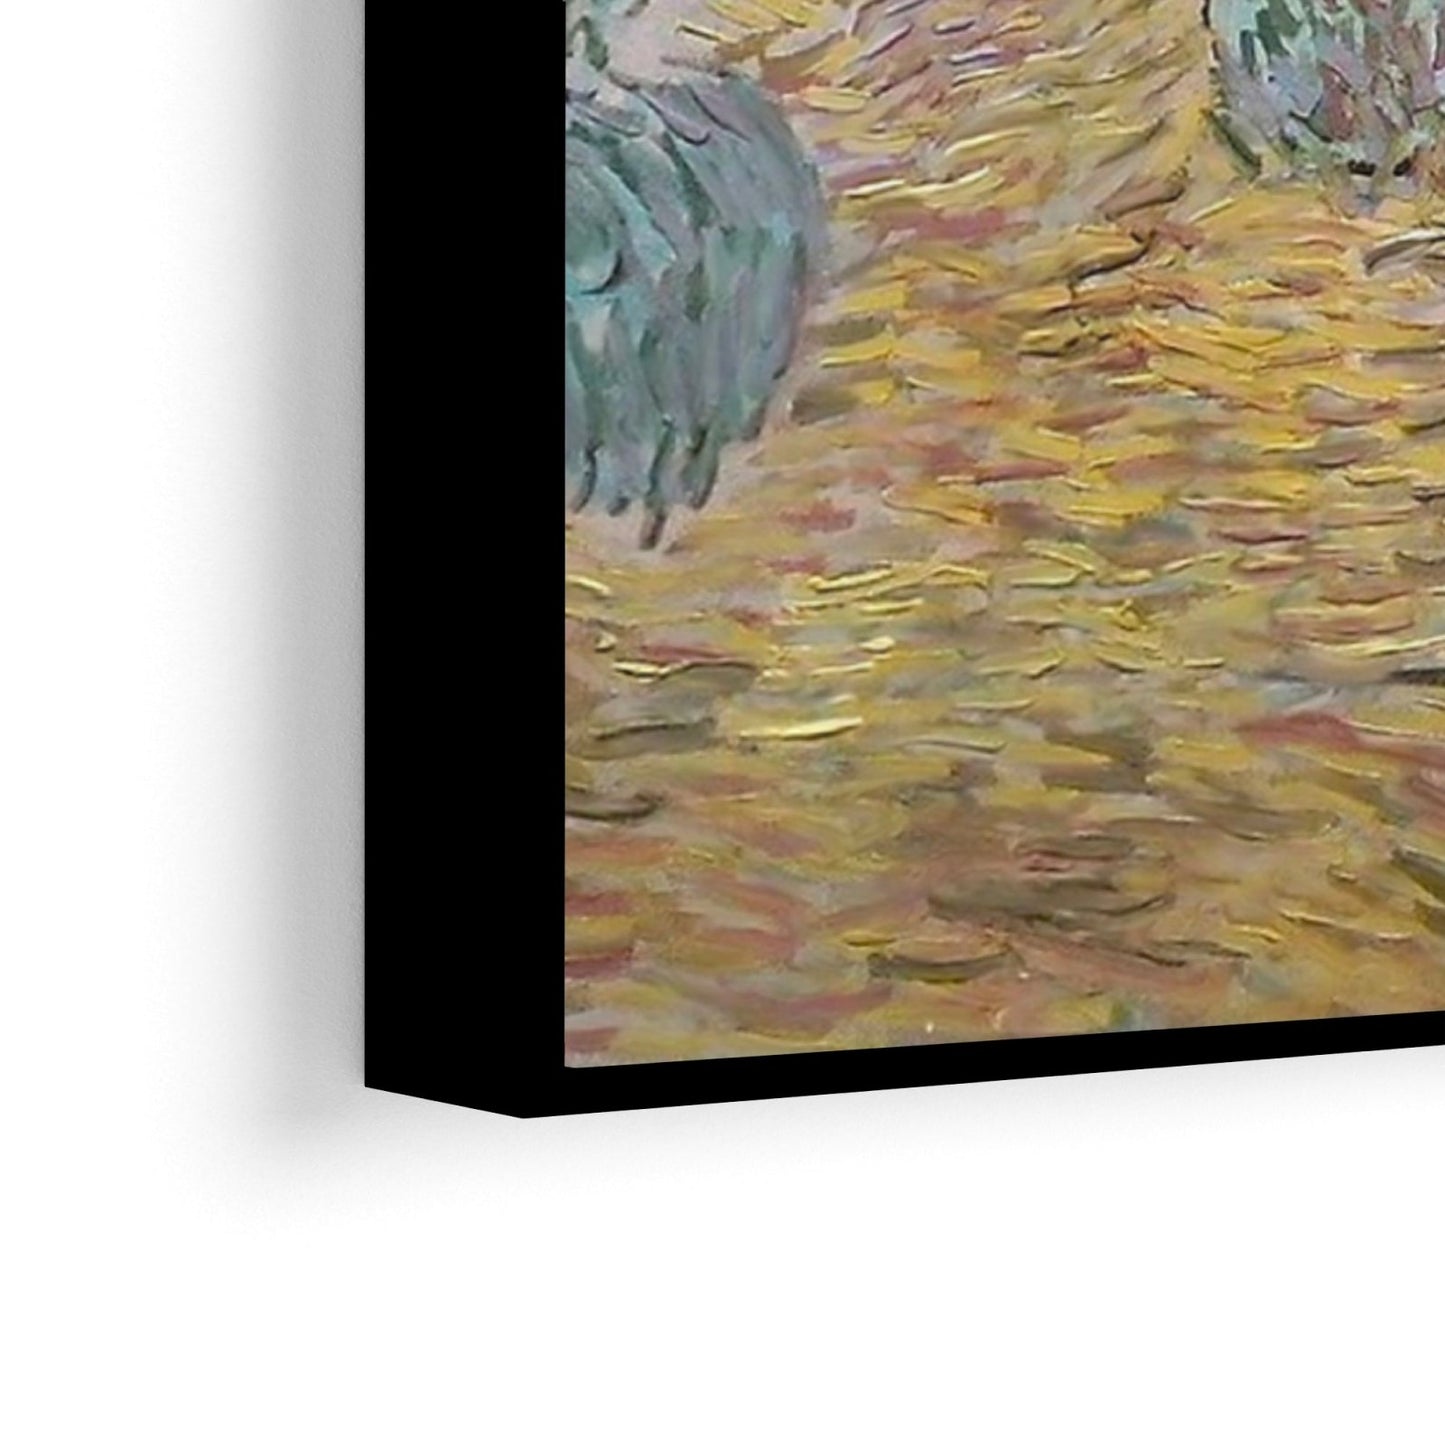 Căsuță albă printre măslini, Vincent Van Gogh